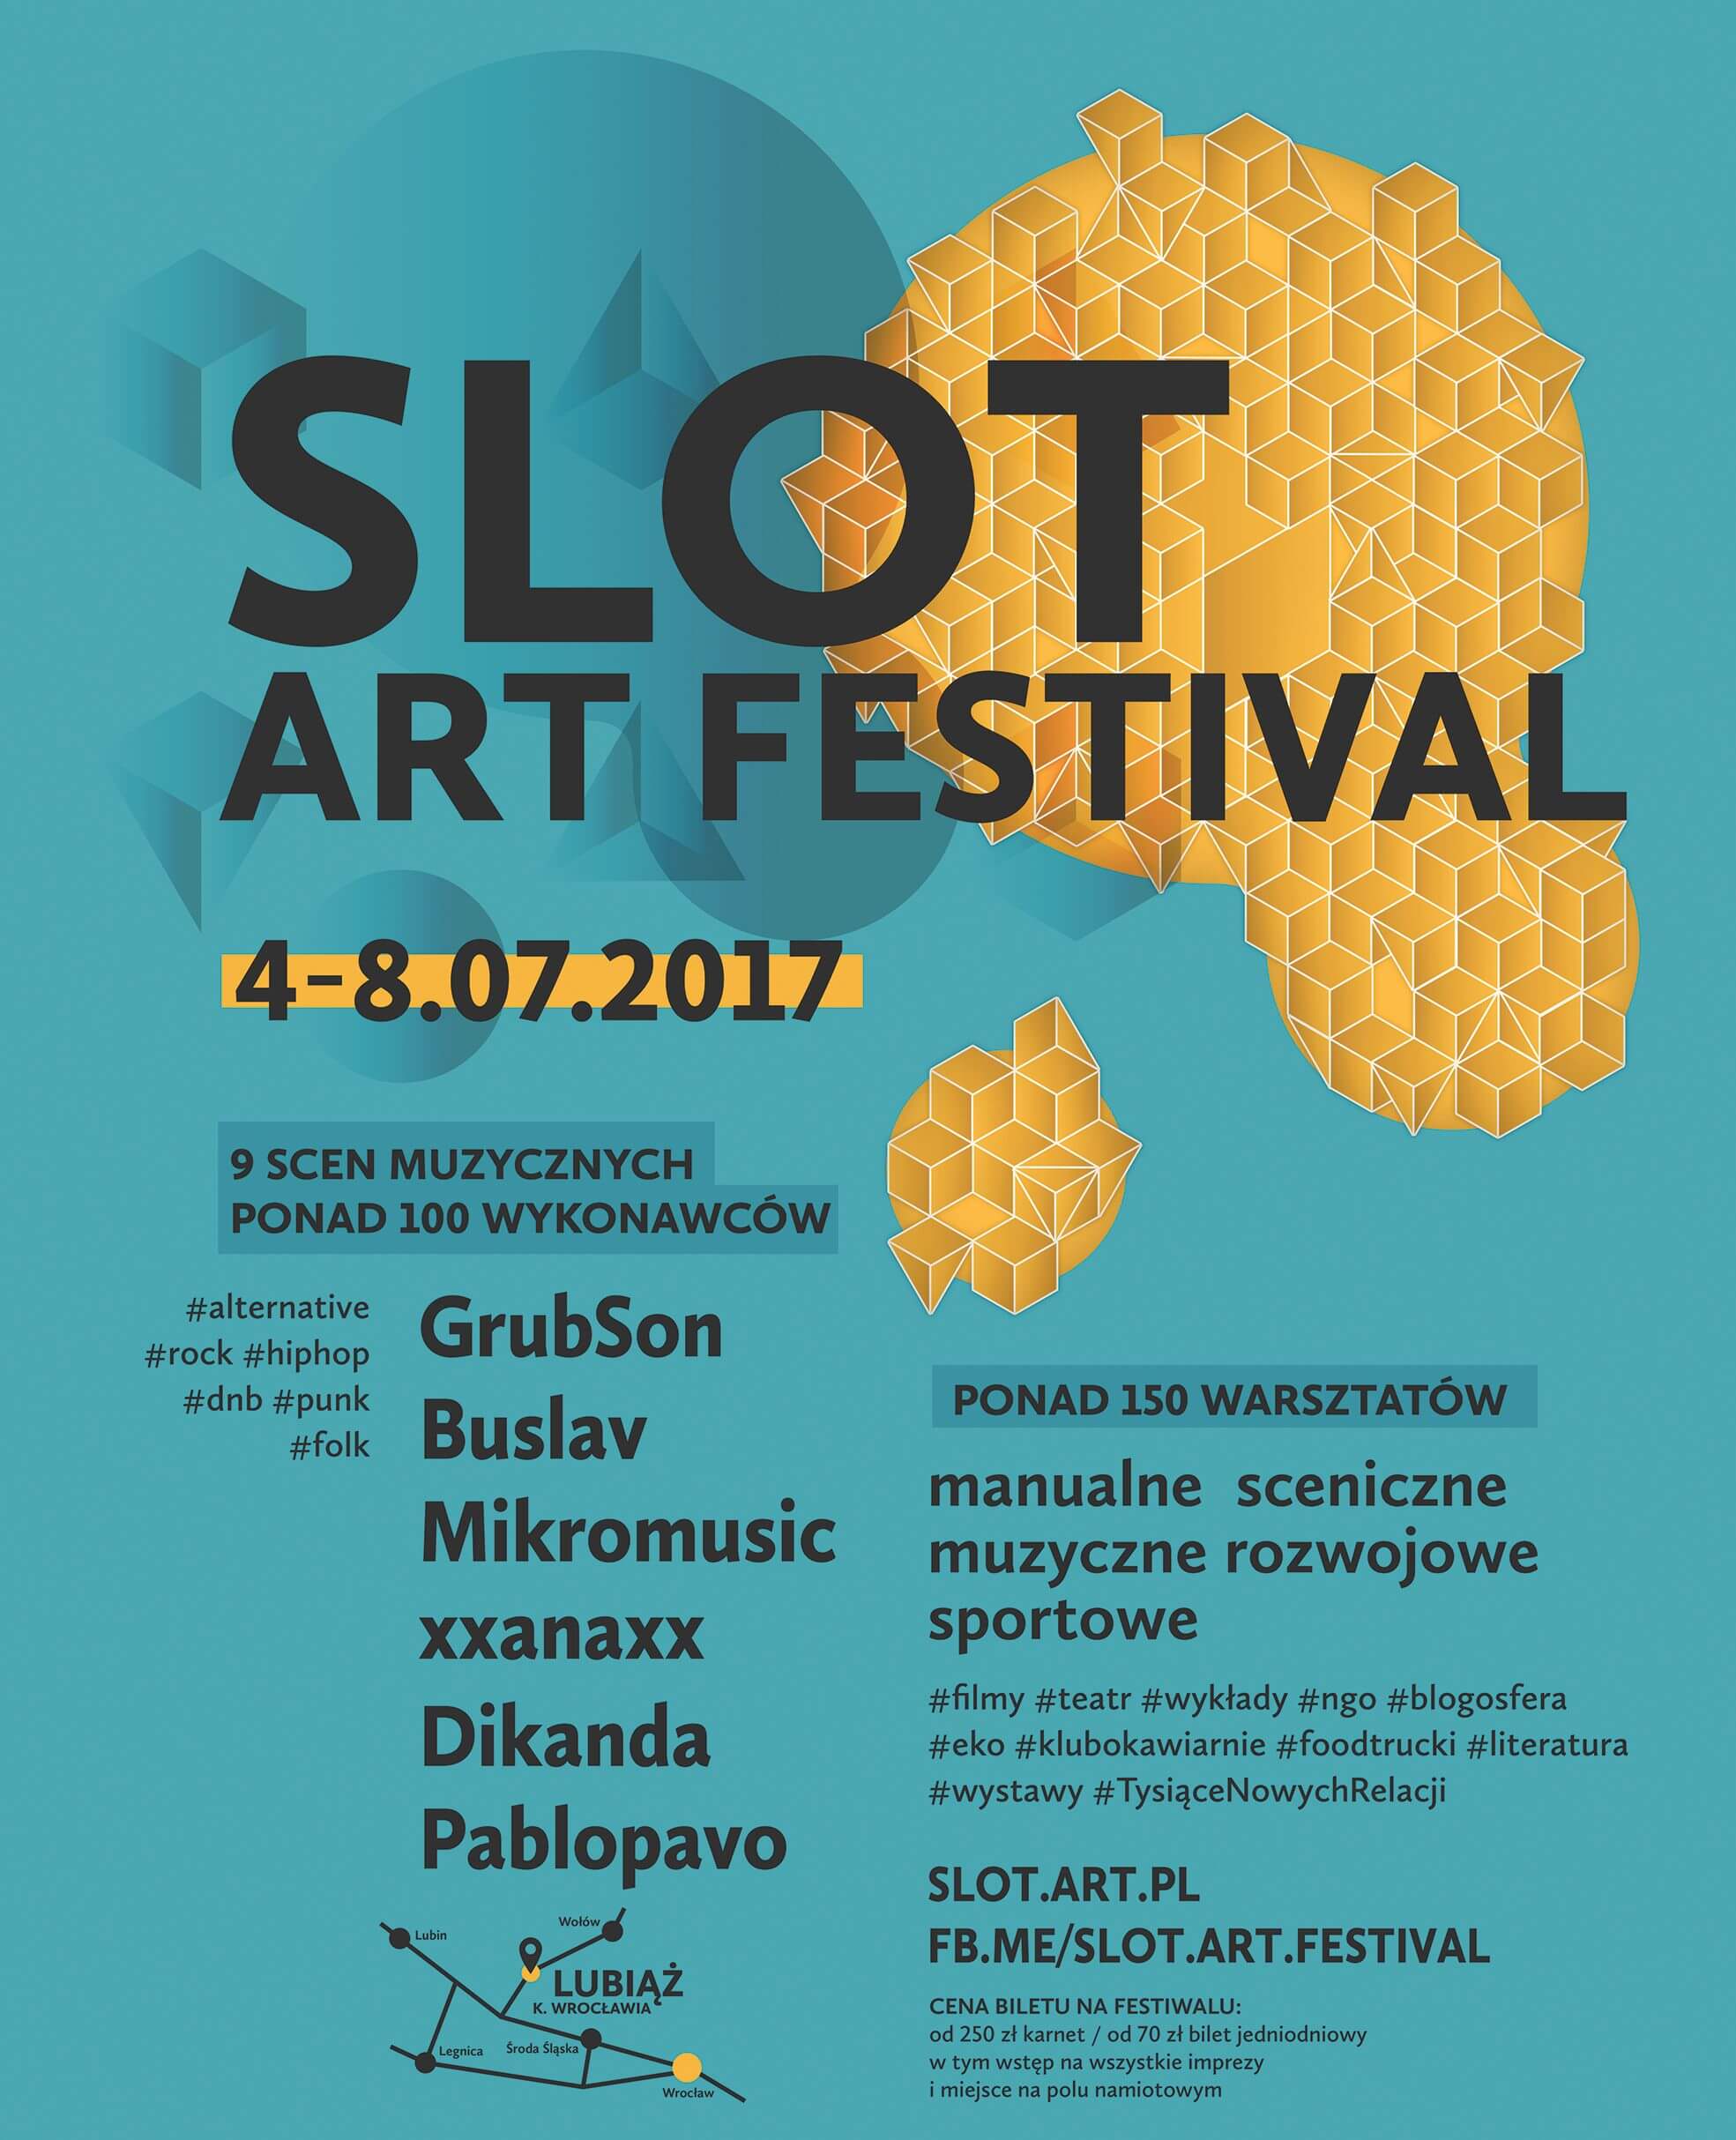 Slot Art Festiwal